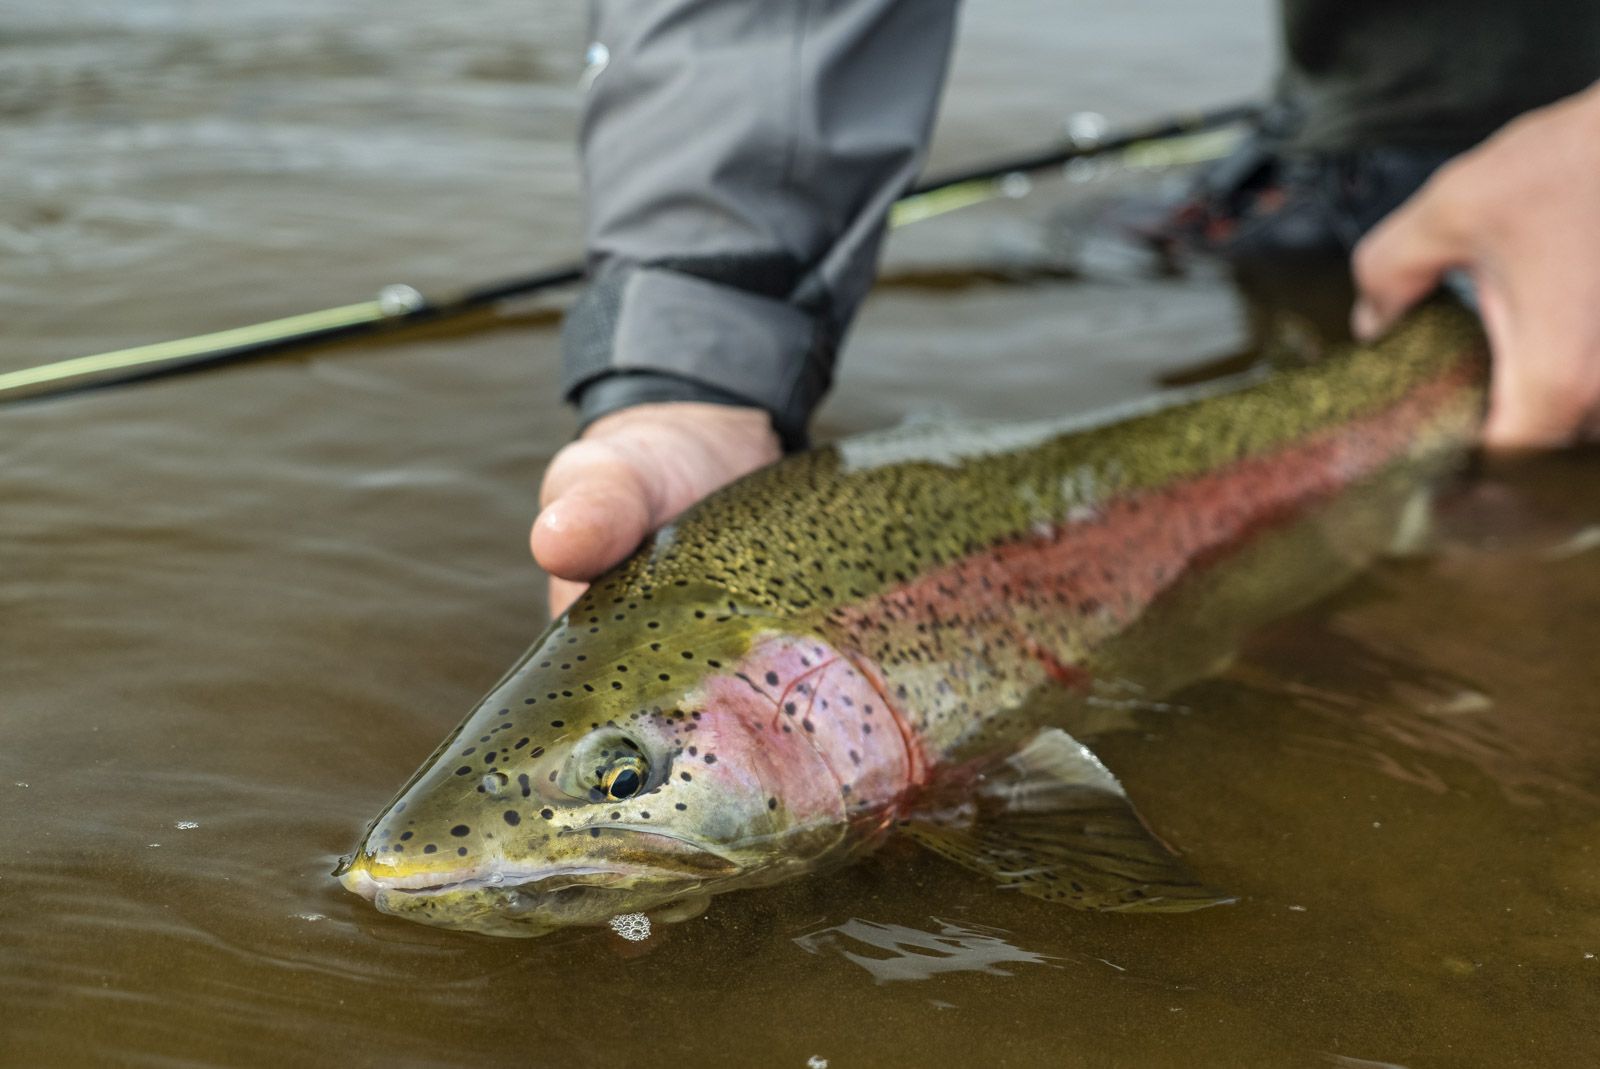 Rainbow Trout fishing Alaska 